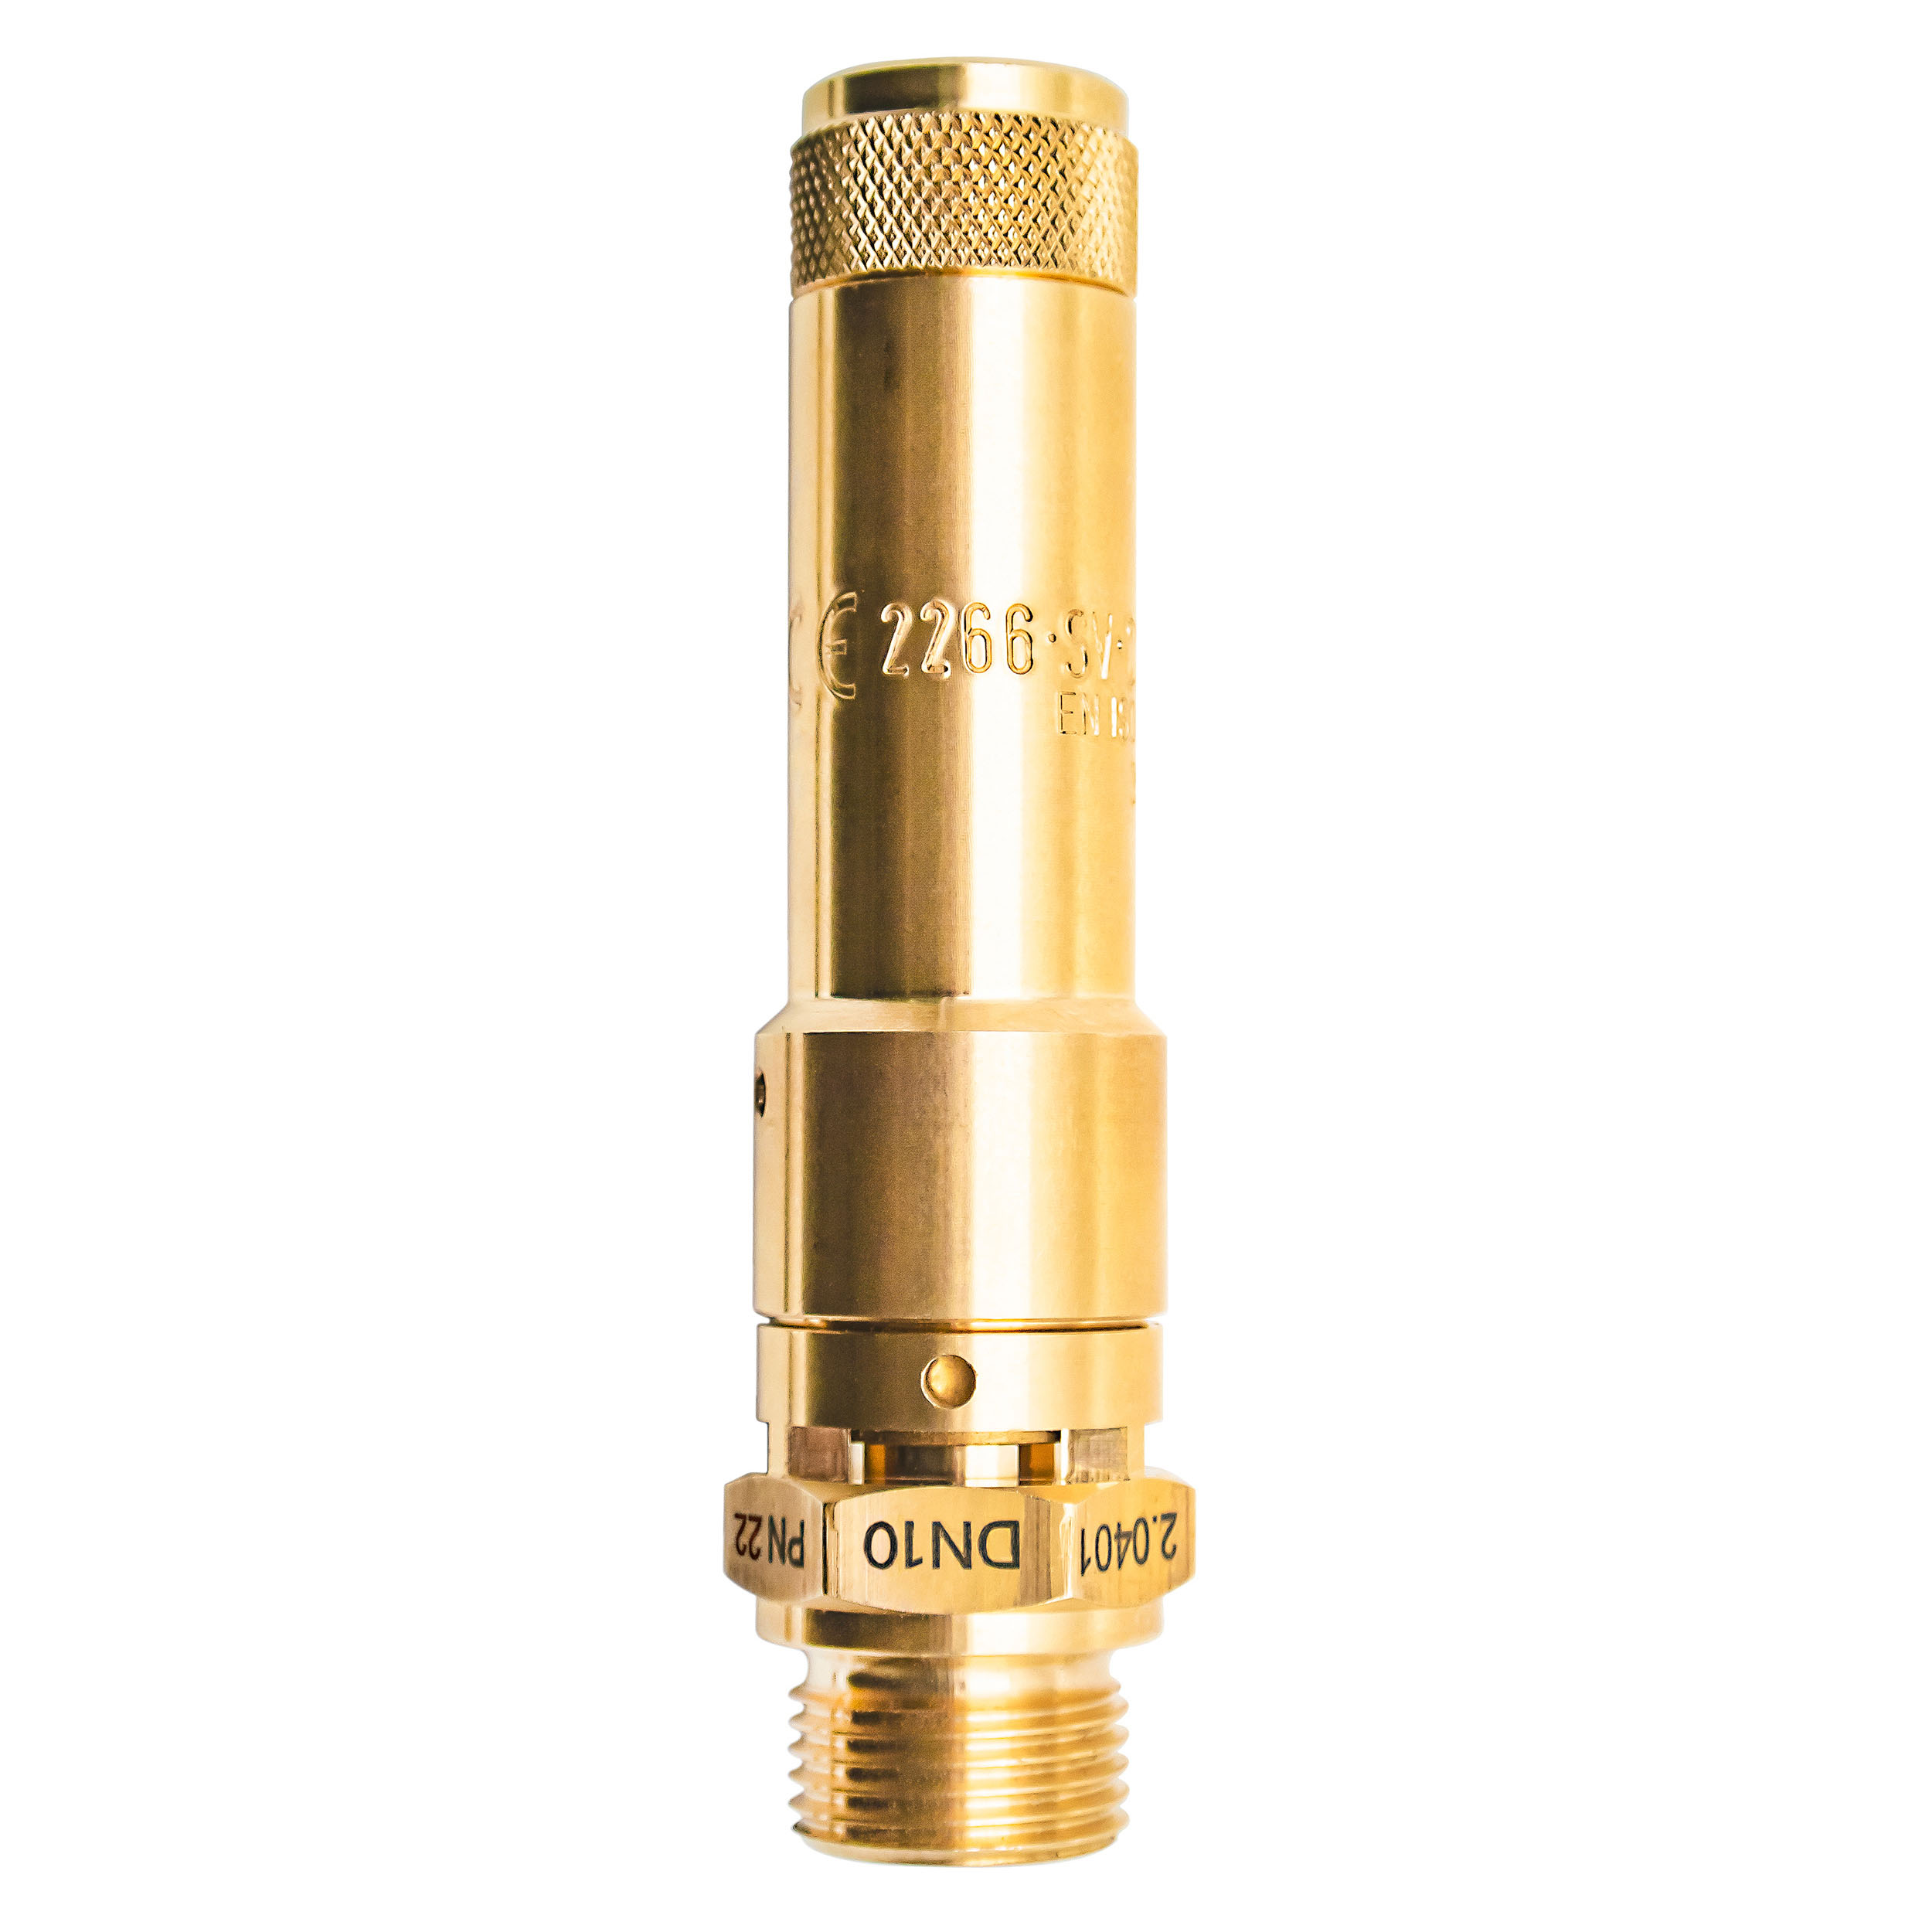 Savety valve component tested DN 10, G¾, set pressure: 4.5 bar (65,25 psi)